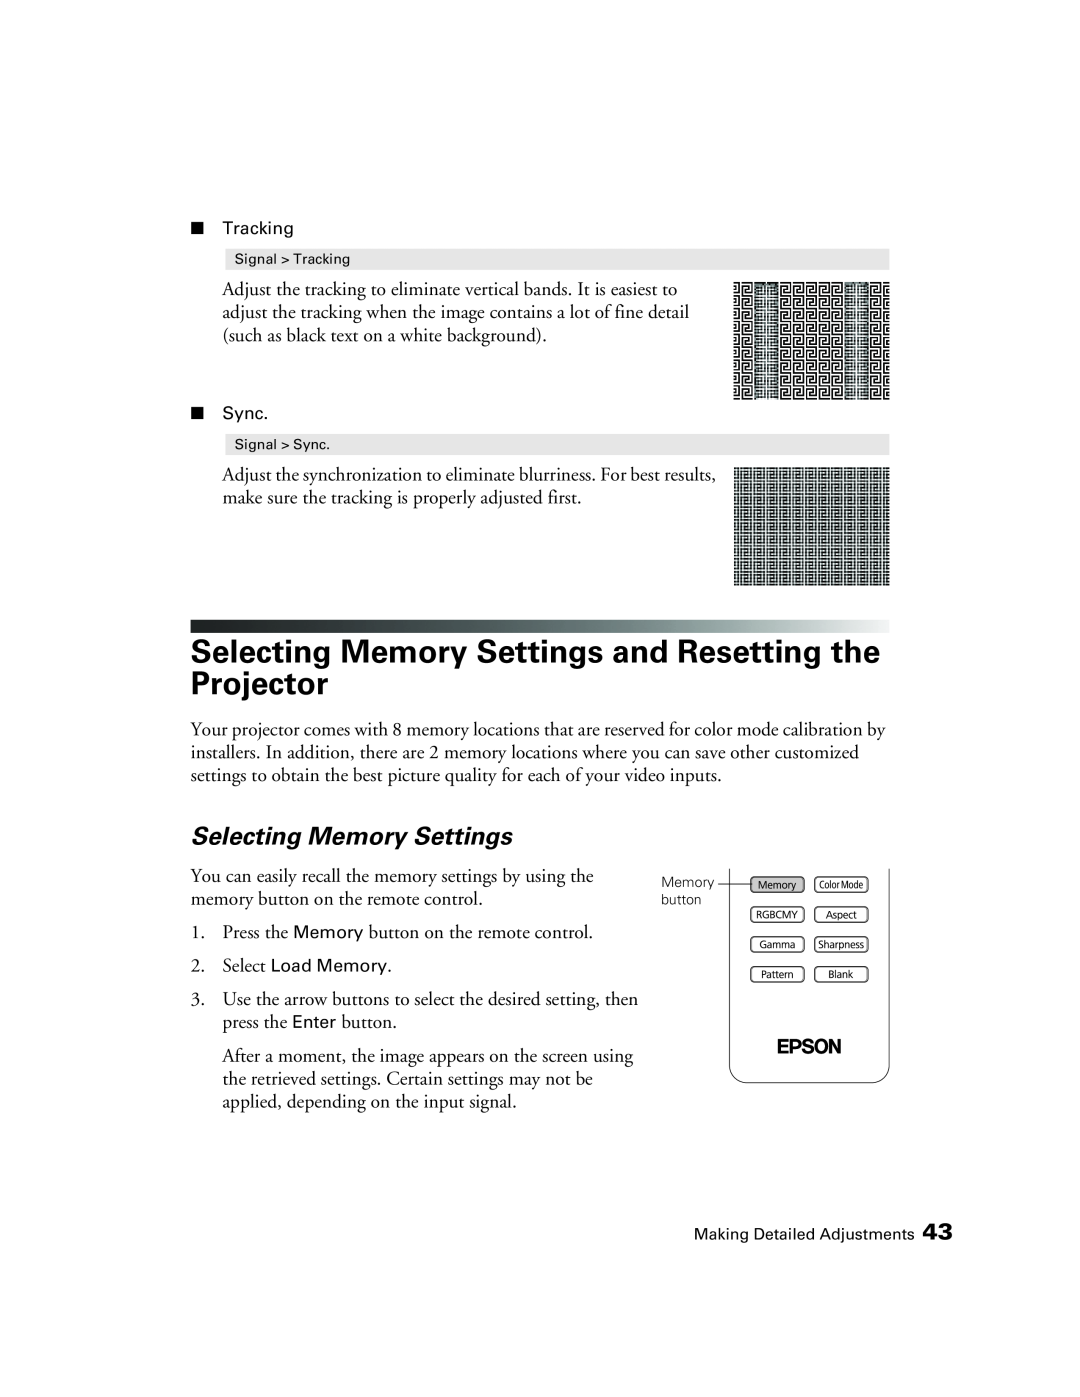 Epson 9700, 9350 manual Selecting Memory Settings 